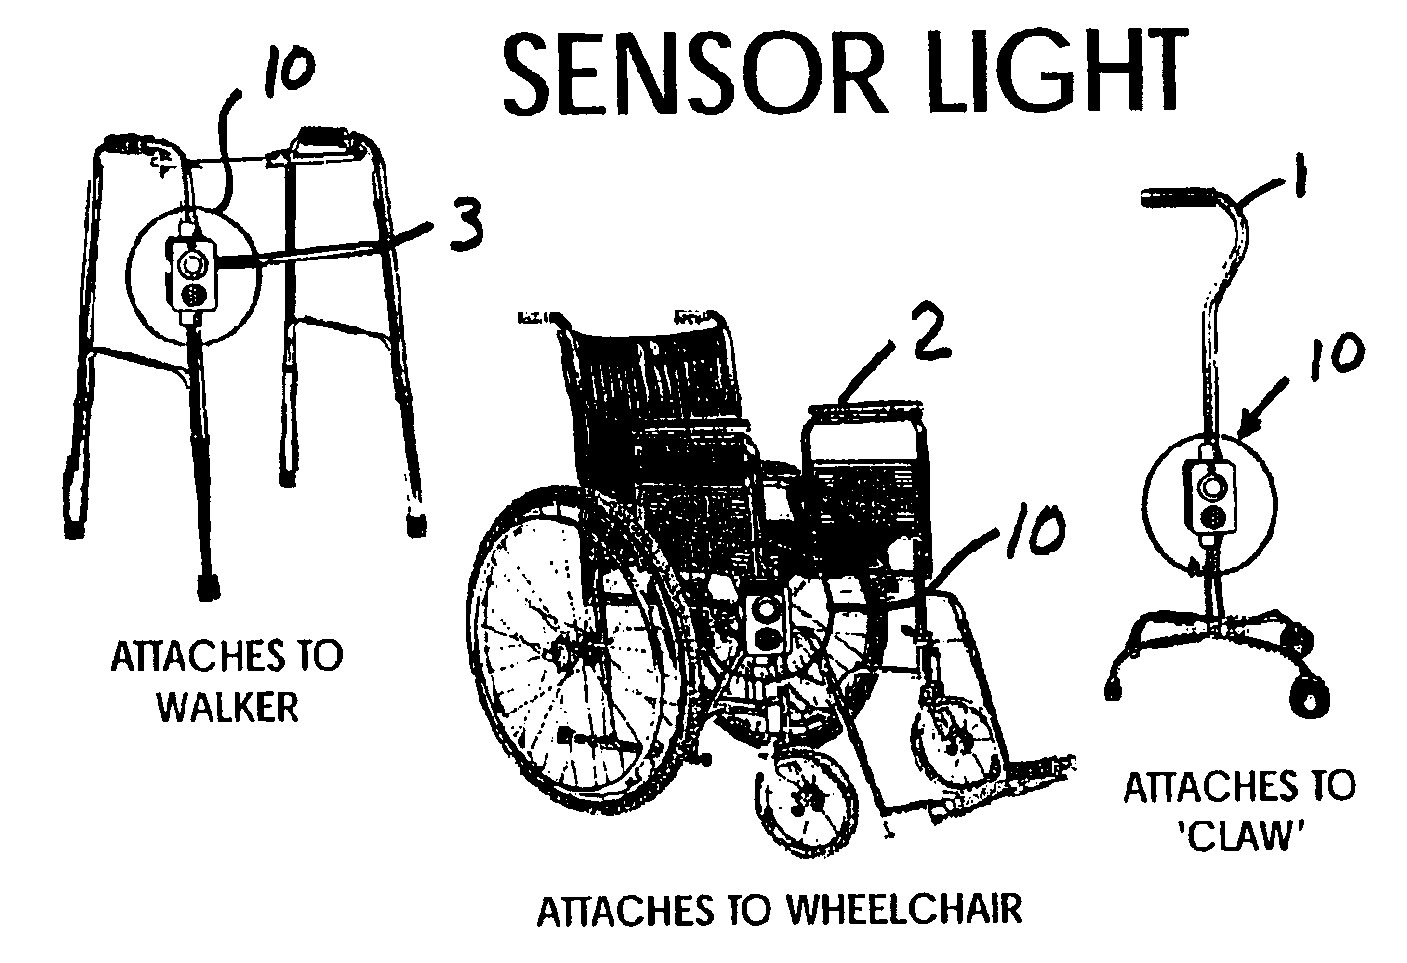 Sensor light device